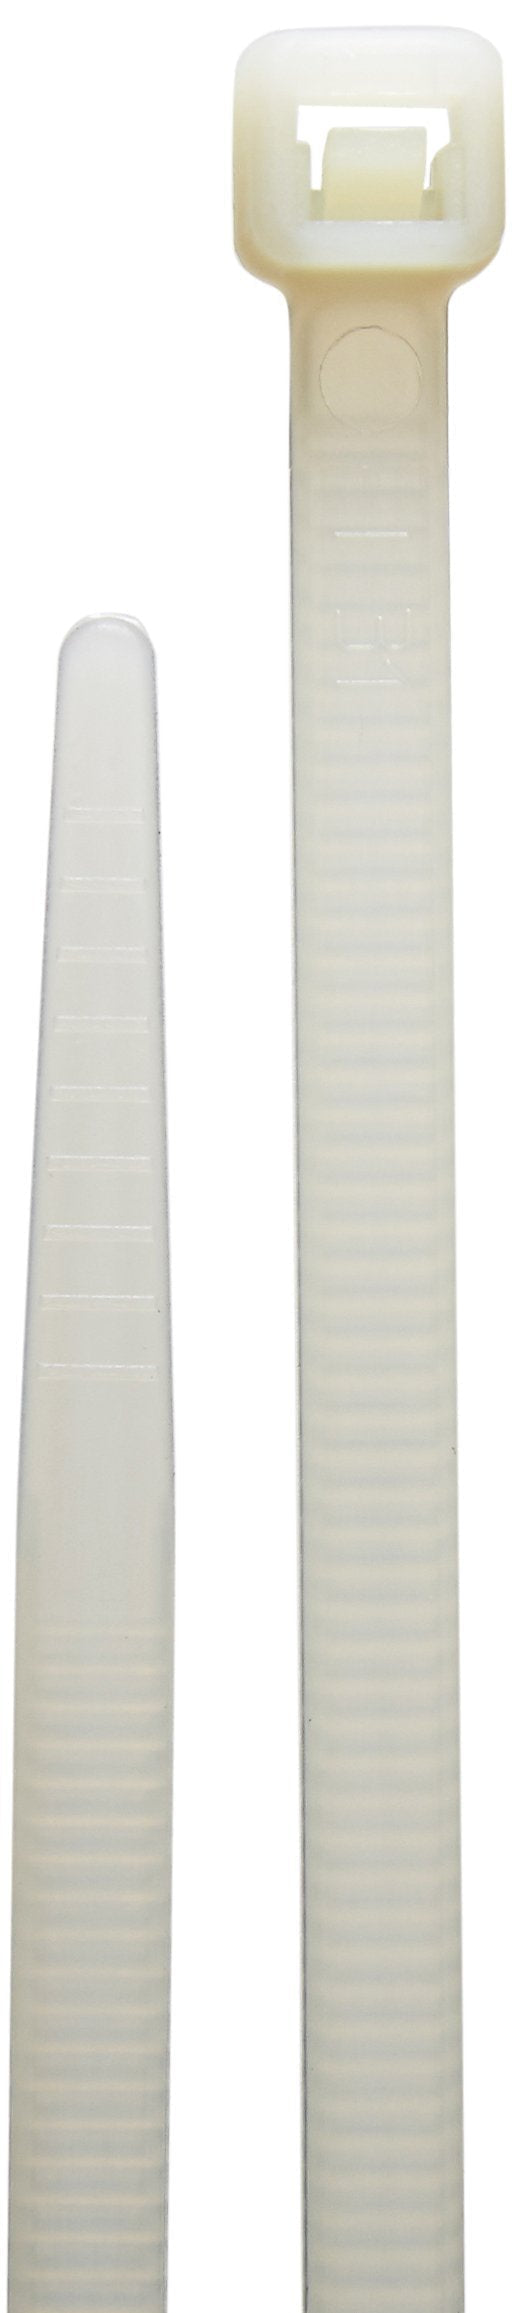  [AUSTRALIA] - Morris 20054 50LB Tensile Strength Nylon Cable Tie, 8-Inch Length, 100-Pack